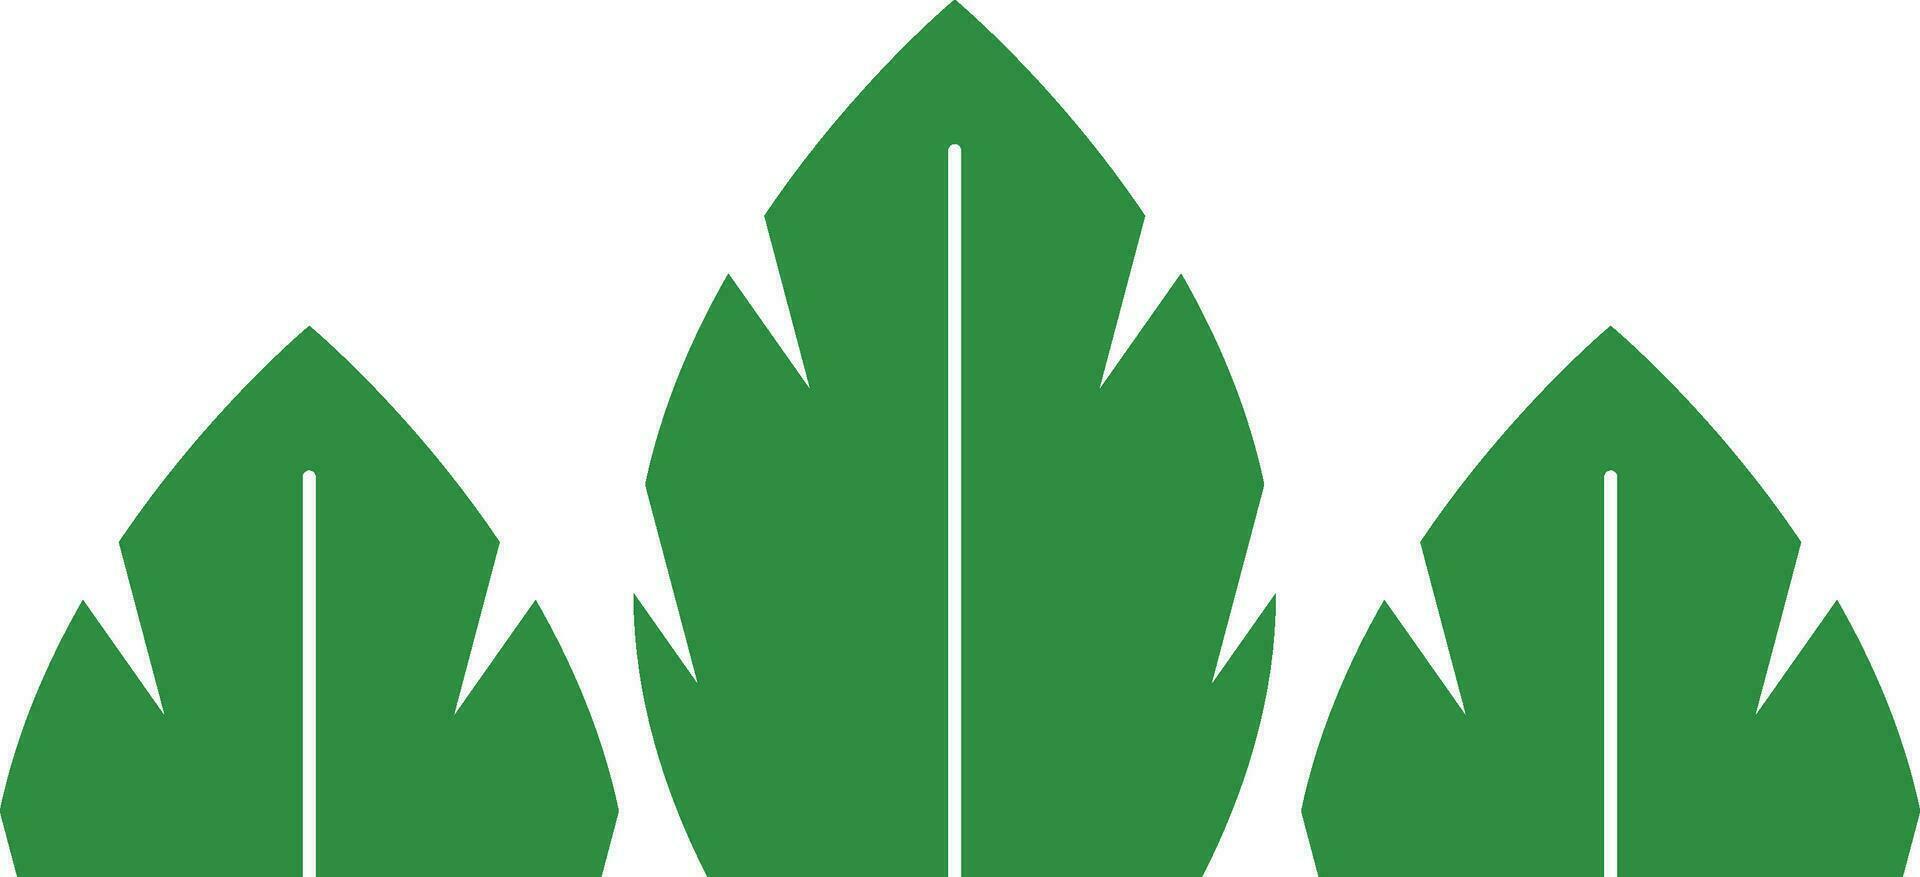 Montsera leaf logo icon vector element